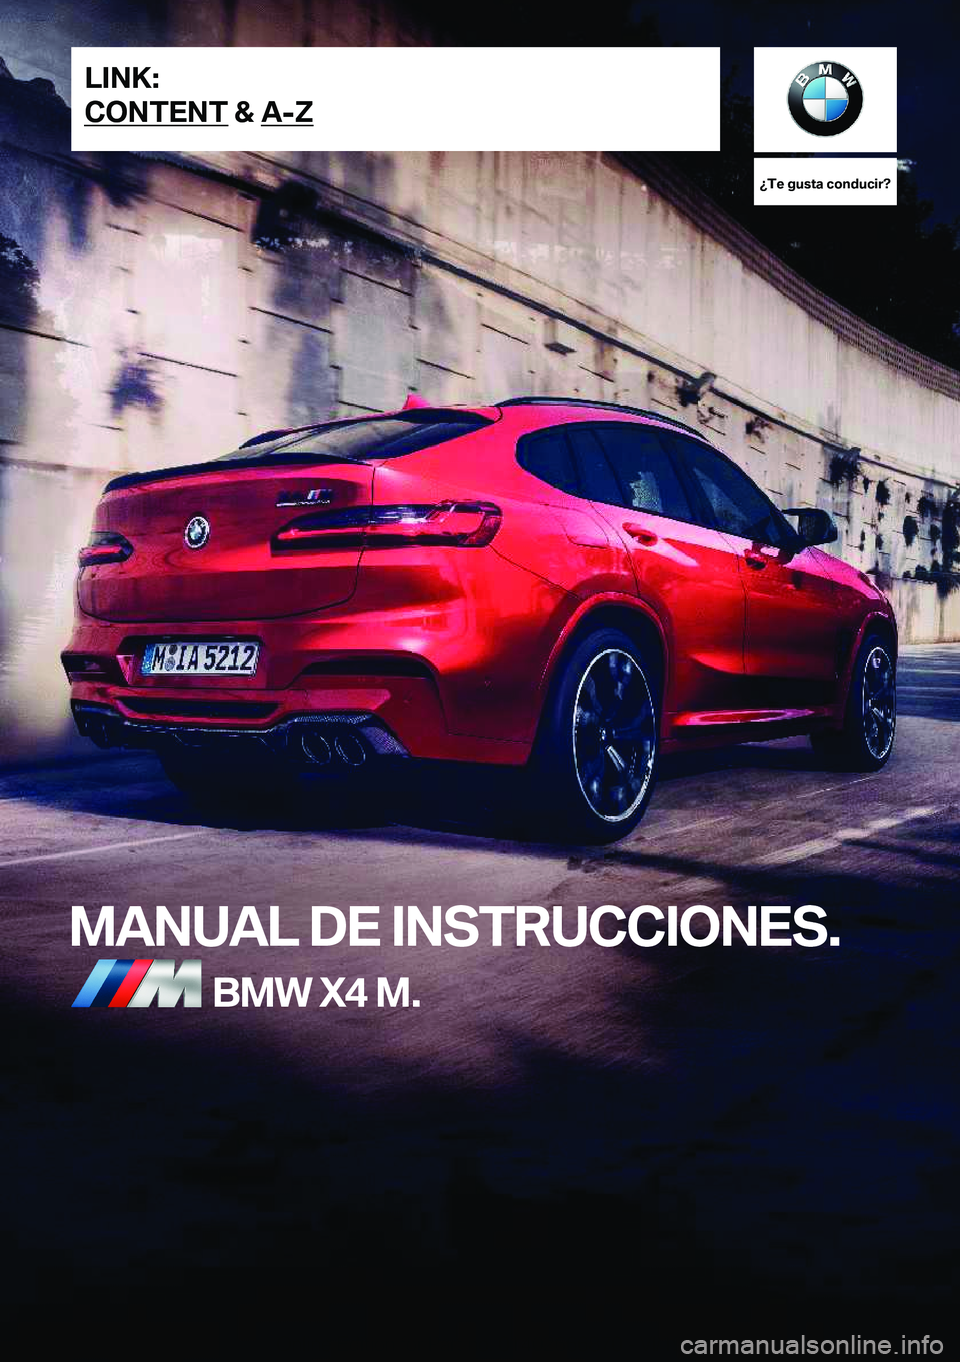 BMW X4 M 2020  Manuales de Empleo (in Spanish) ��T�e��g�u�s�t�a��c�o�n�d�u�c�i�r� 
�M�A�N�U�A�L��D�E��I�N�S�T�R�U�C�C�I�O�N�E�S�.�B�M�W��X�4��M�.�L�I�N�K�:
�C�O�N�T�E�N�T��&��A�-�Z�O�n�l�i�n�e��E�d�i�t�i�o�n��f�o�r��P�a�r�t��n�o�.��0